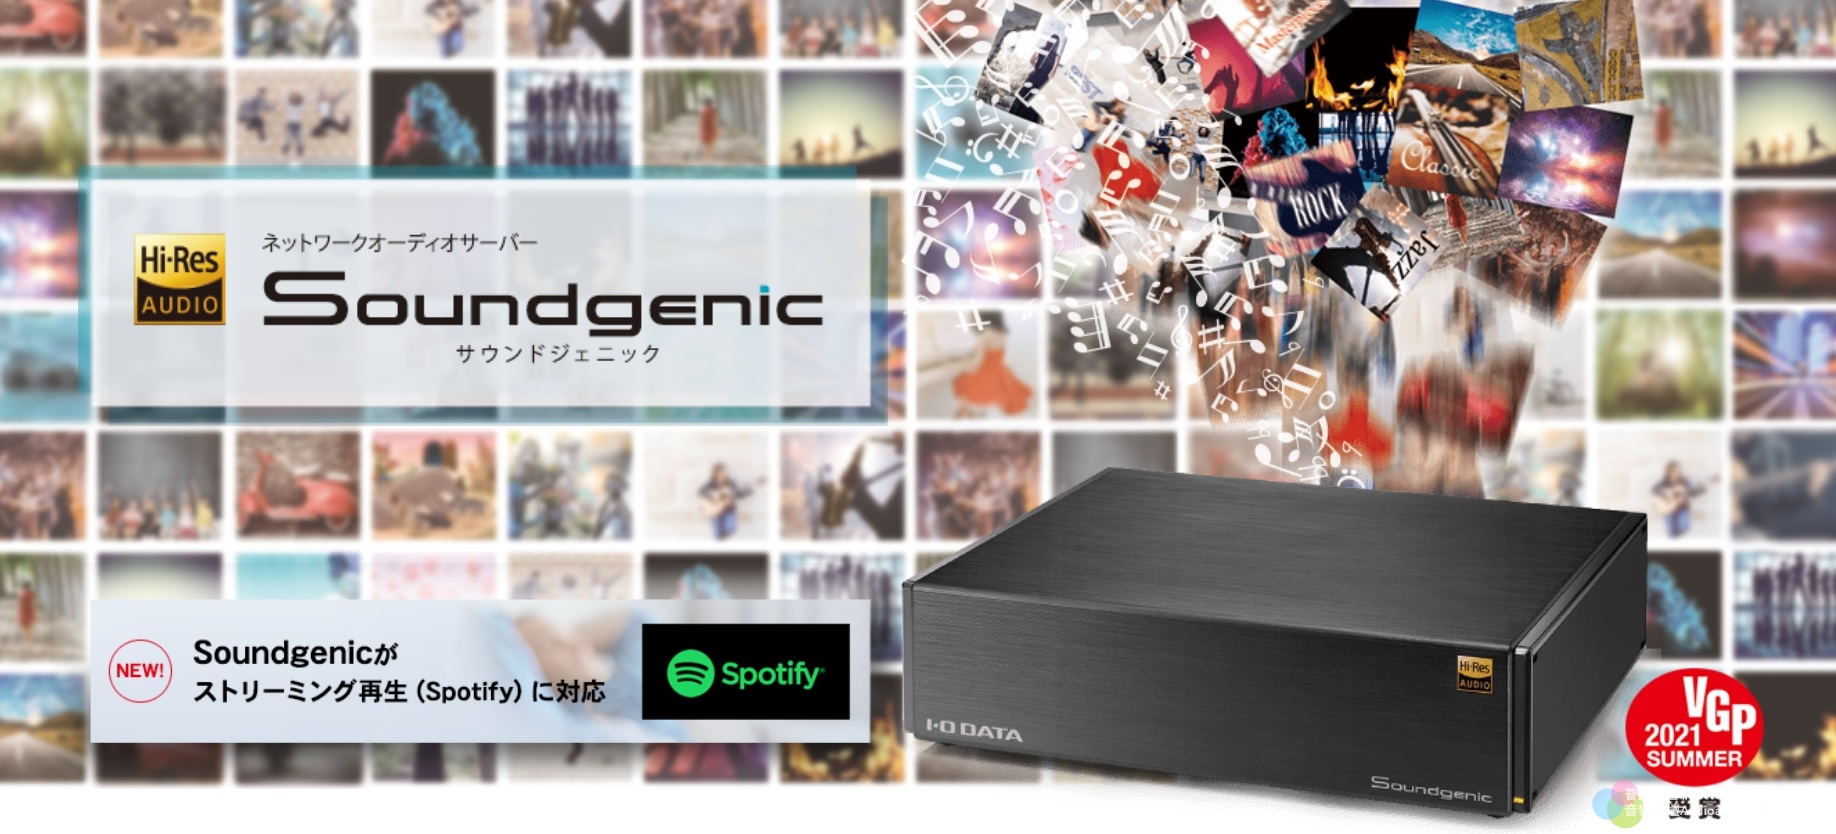 Soundgenic現在支援Spotify connect連接